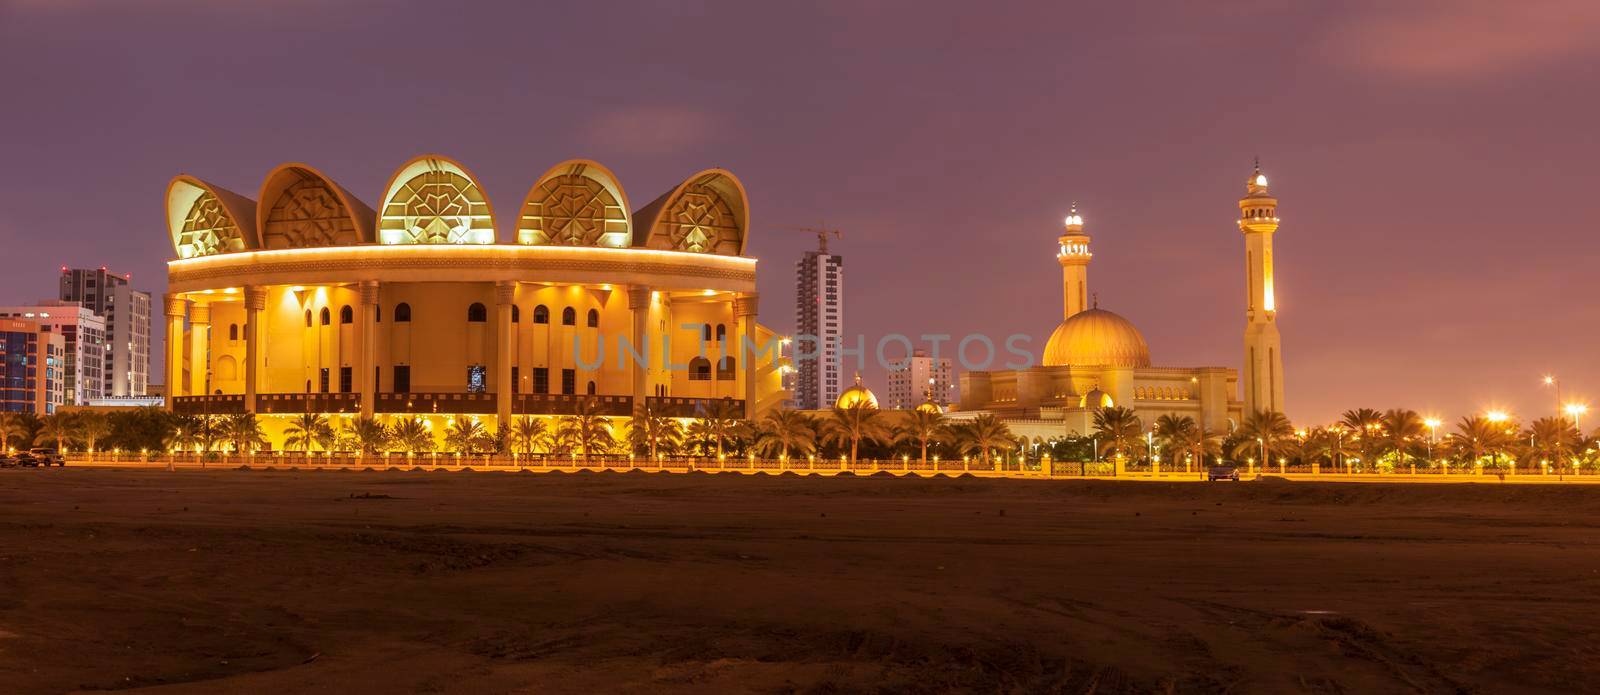 Bahrain National Library and Al Fateh Grand Mosque in Manama. Manama, Bahrain.